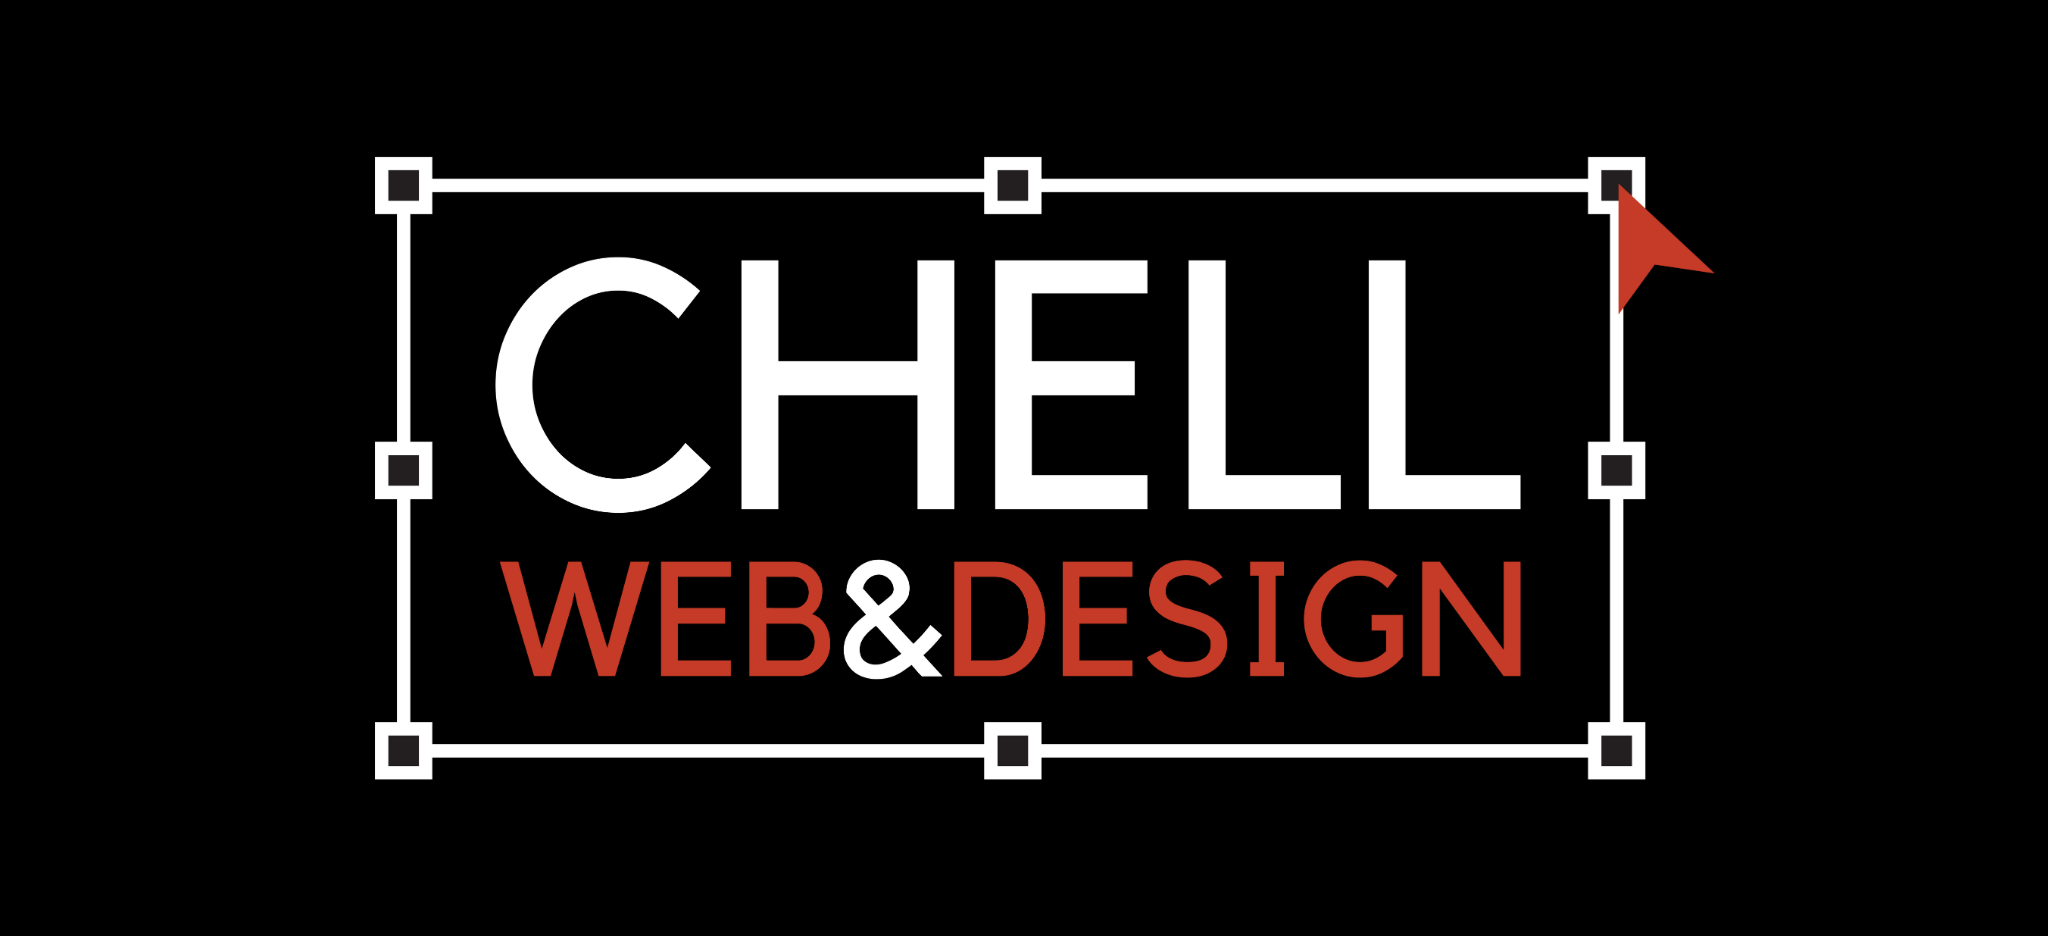 Chell Web & Design - Sasha Mitchell Website & Design Services Blog Featured image